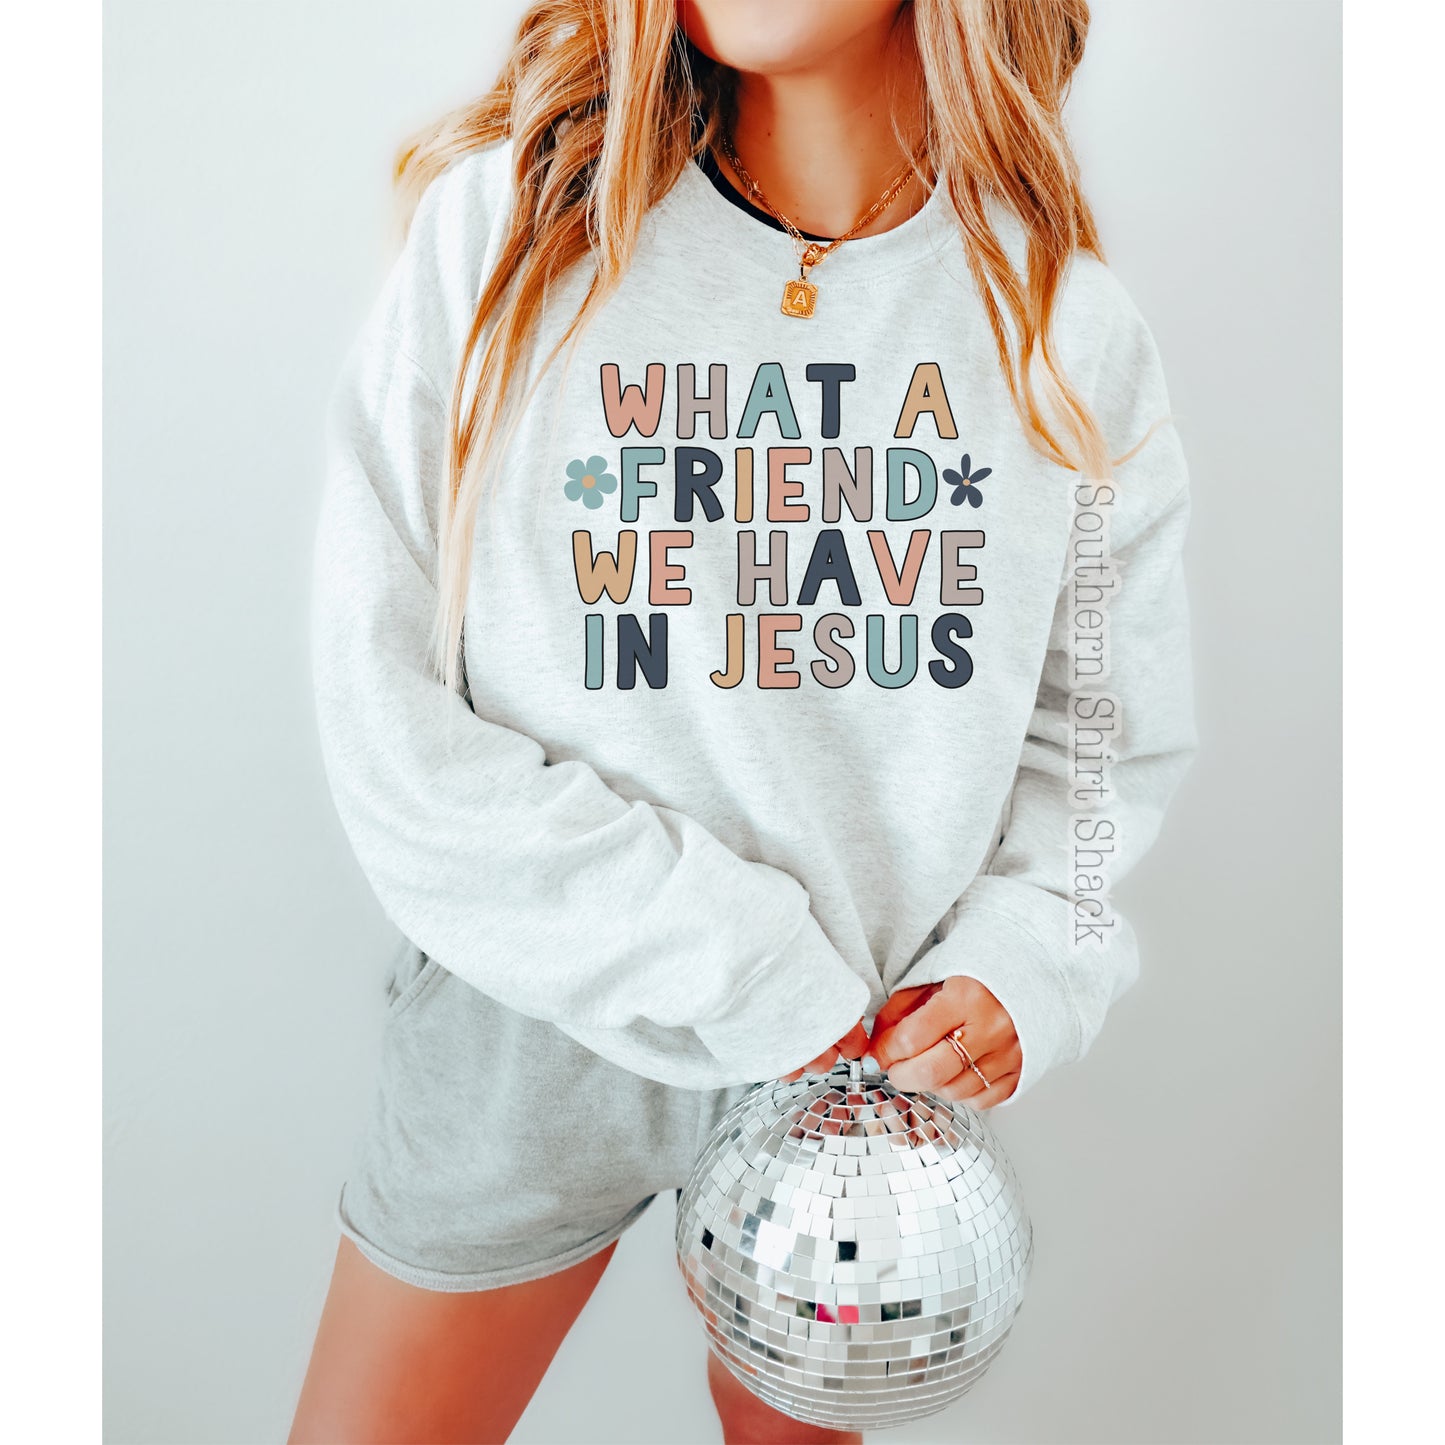 What a friend we have in Jesus Sweatshirt